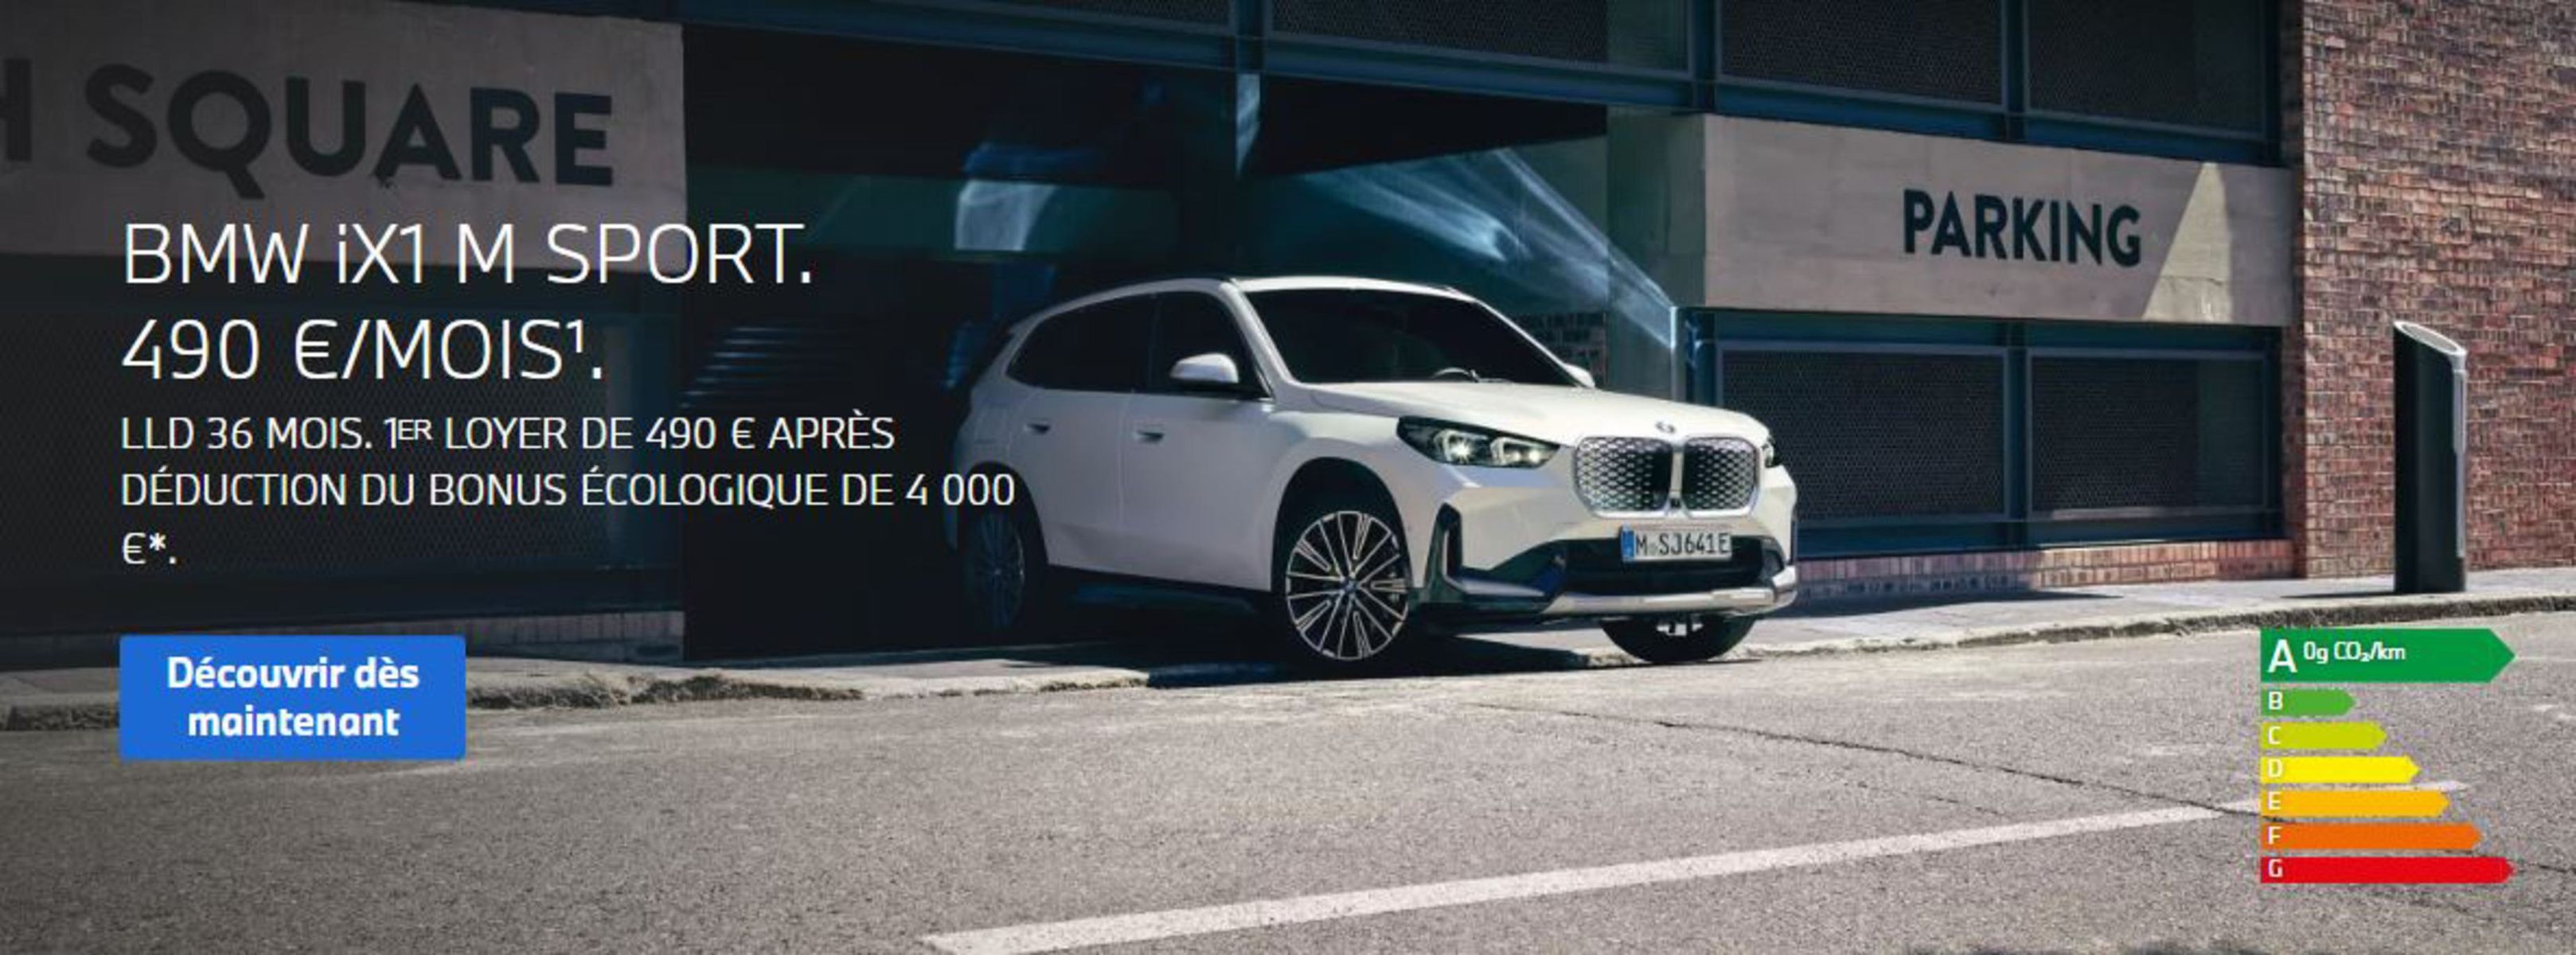 Catalogue BMW iX1 M SPORT. 490 €/MOIS¹, page 00001